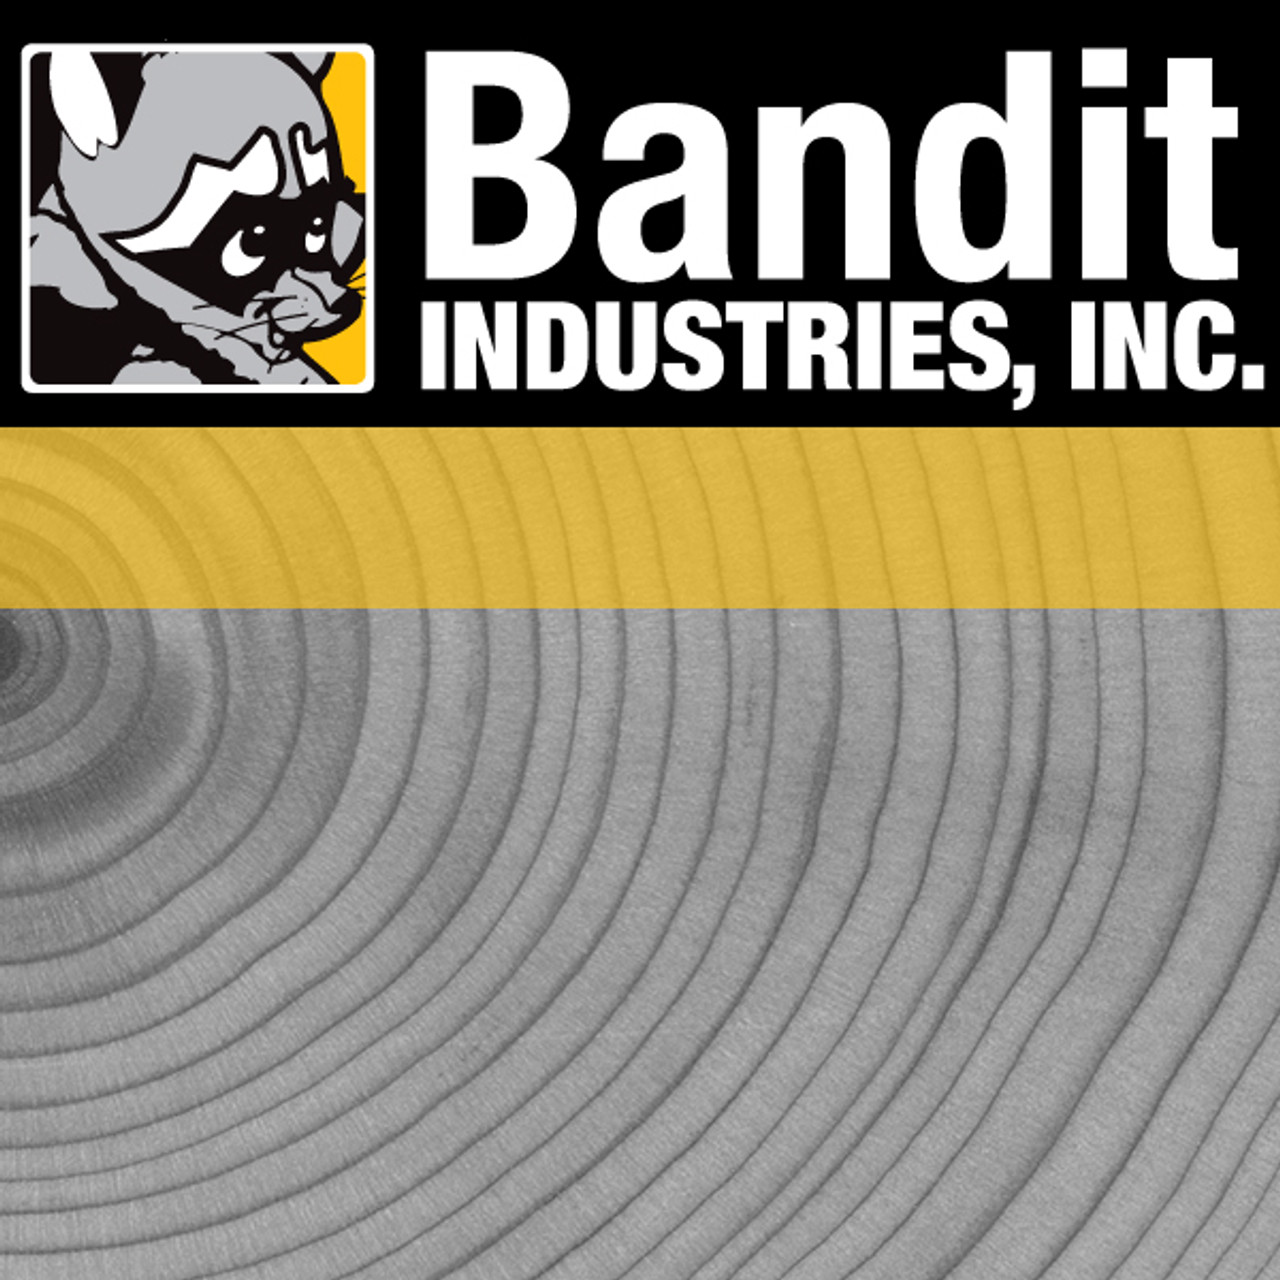 993-2001-36: BANDIT DUAL WHEEL HUB FOR CARLISLE TIRE